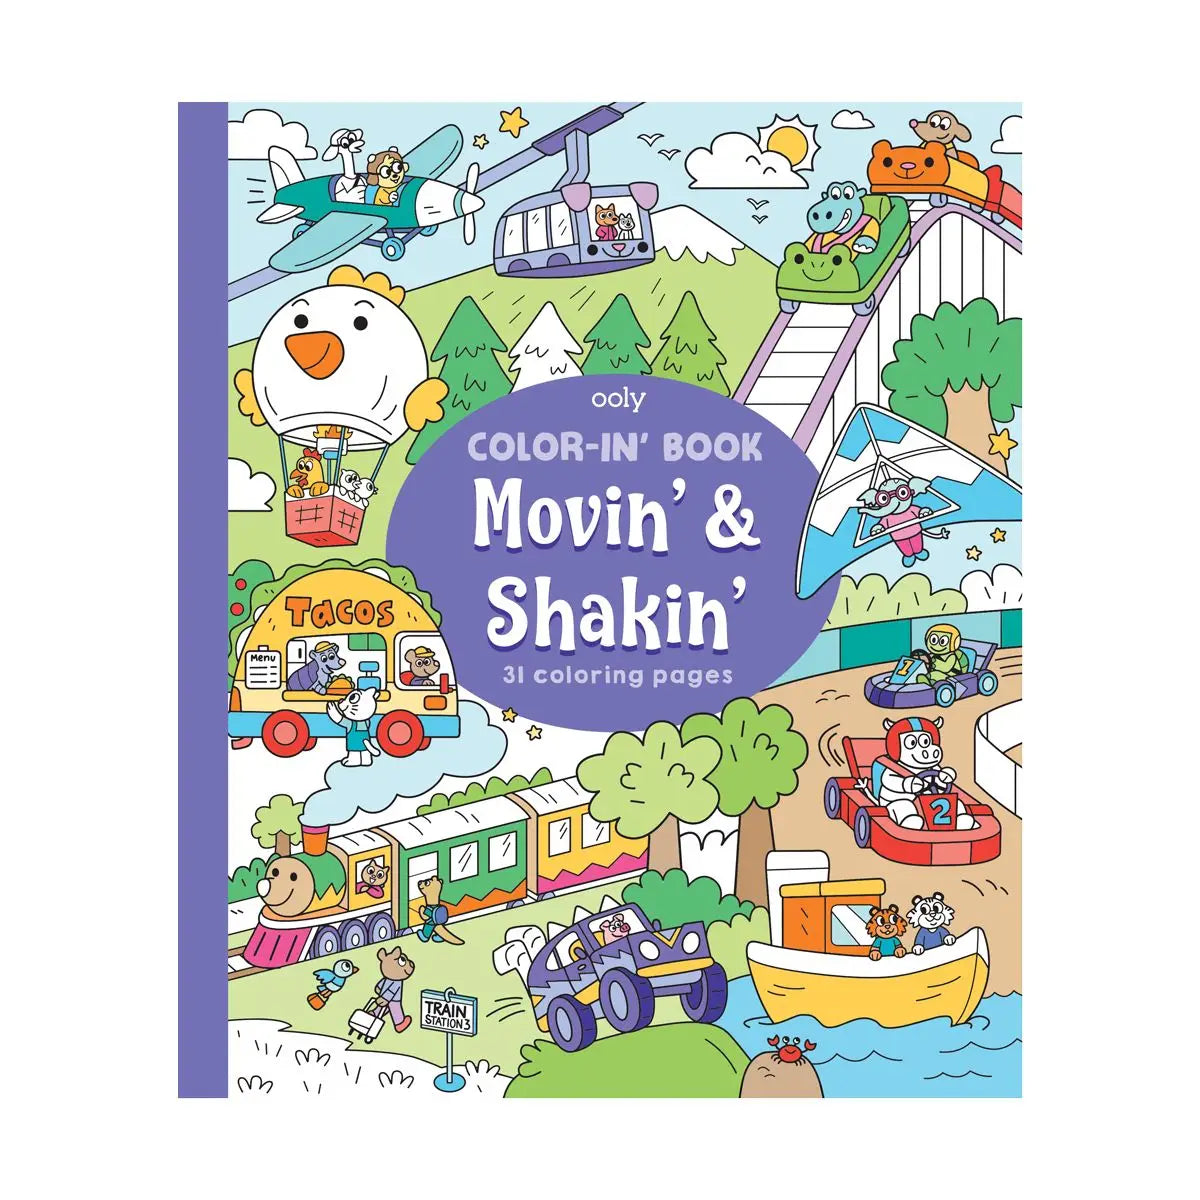 Color-in Book: Movin' & Shakin'